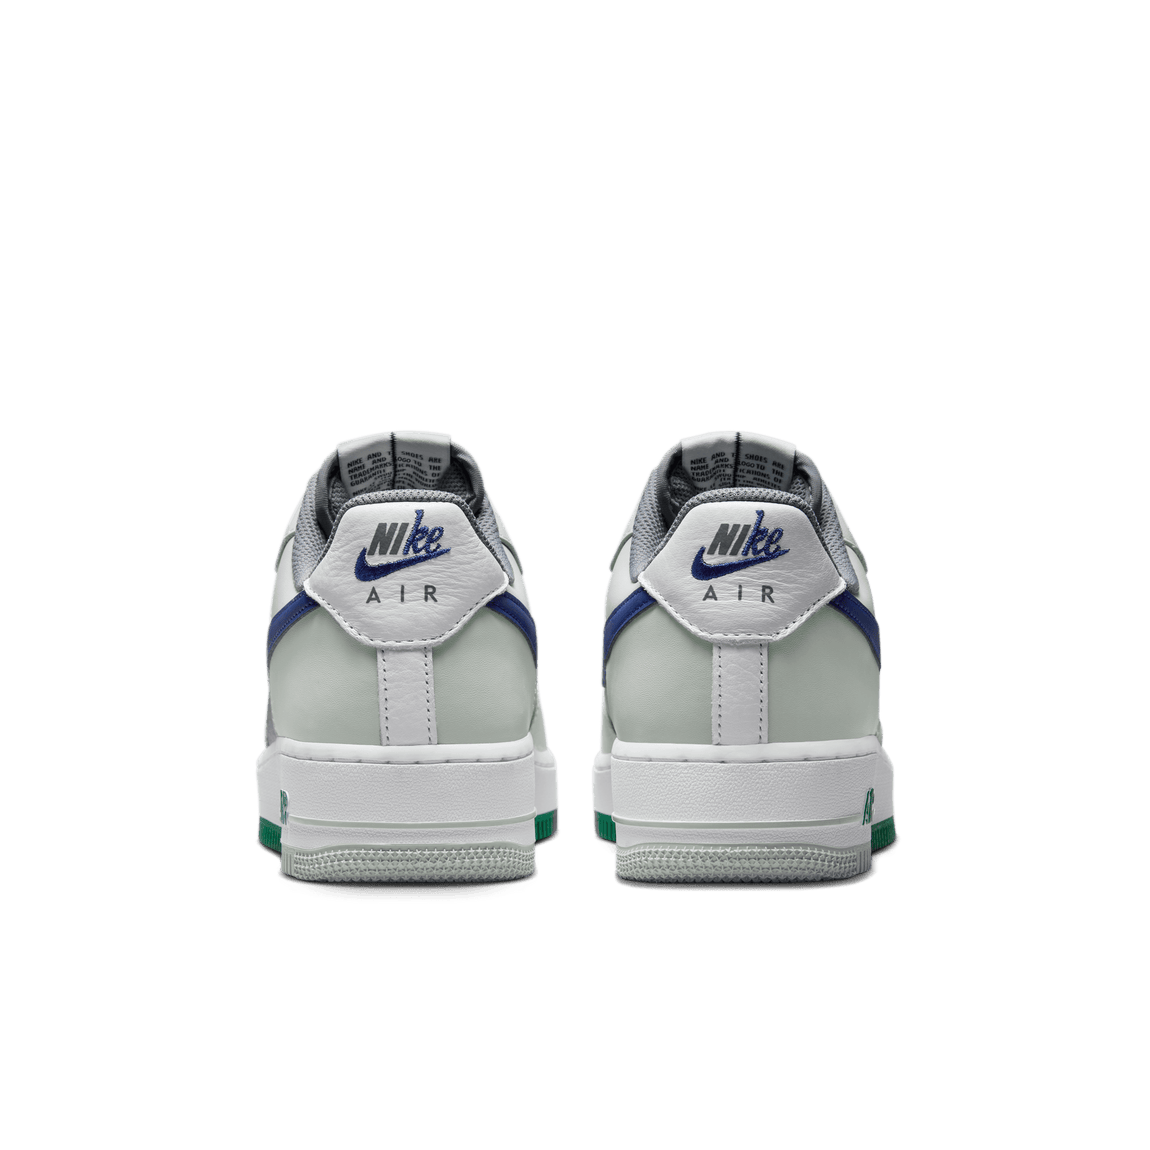 Nike Air Force 1 '07 LV8 (Light Silver/Deep Royal Blue-White) - Nike Air Force 1 '07 LV8 (Light Silver/Deep Royal Blue-White) - 